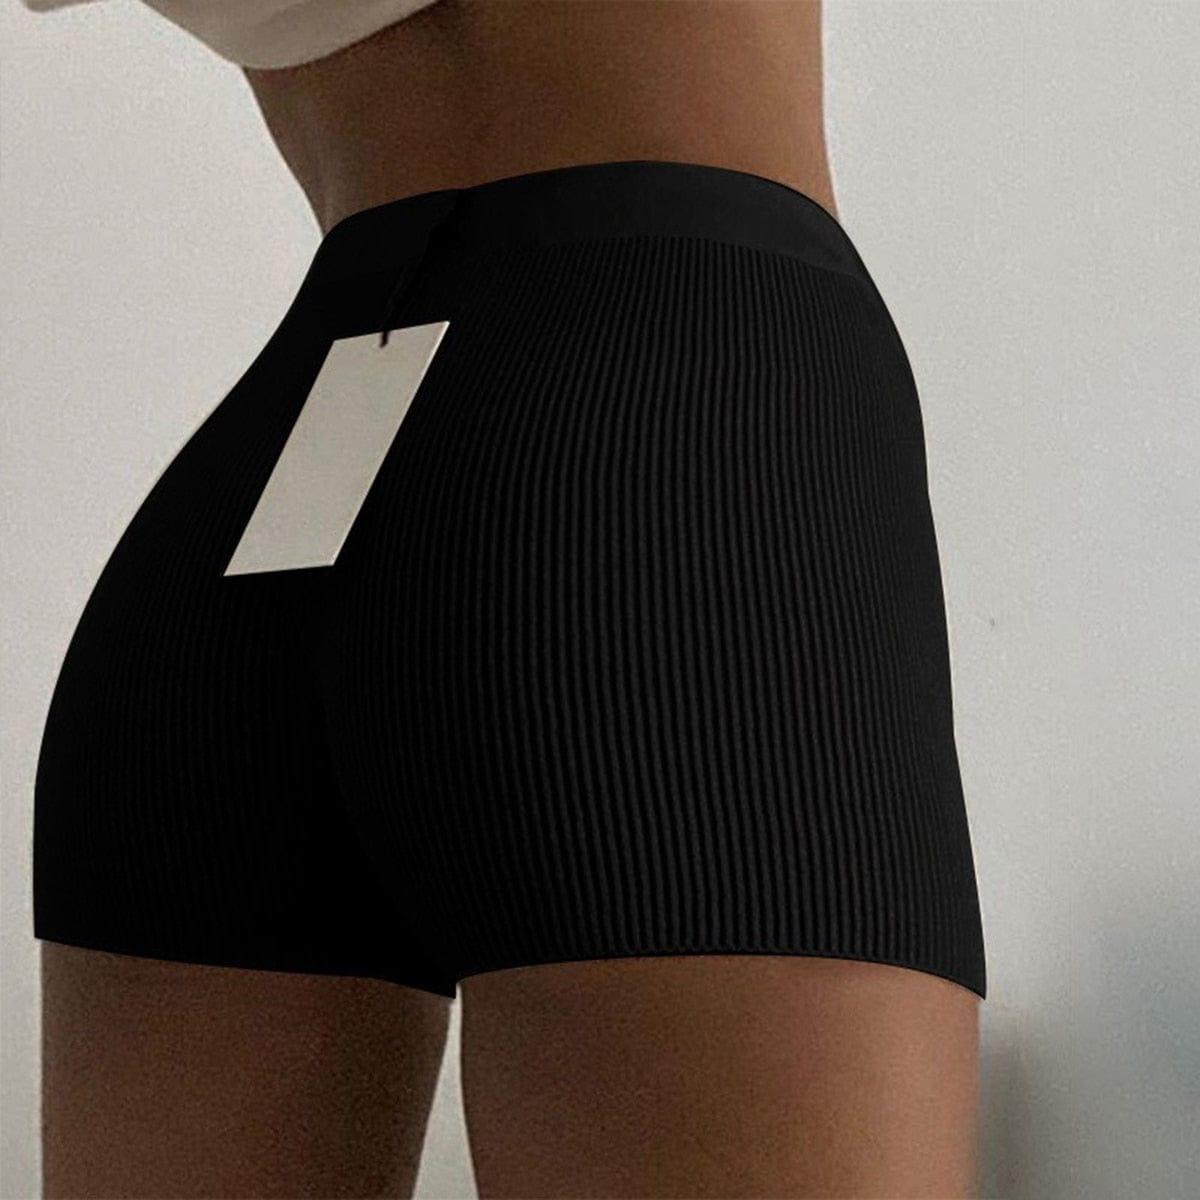 Adriana elastic shorts - VERSO QUALITY MATERIALS